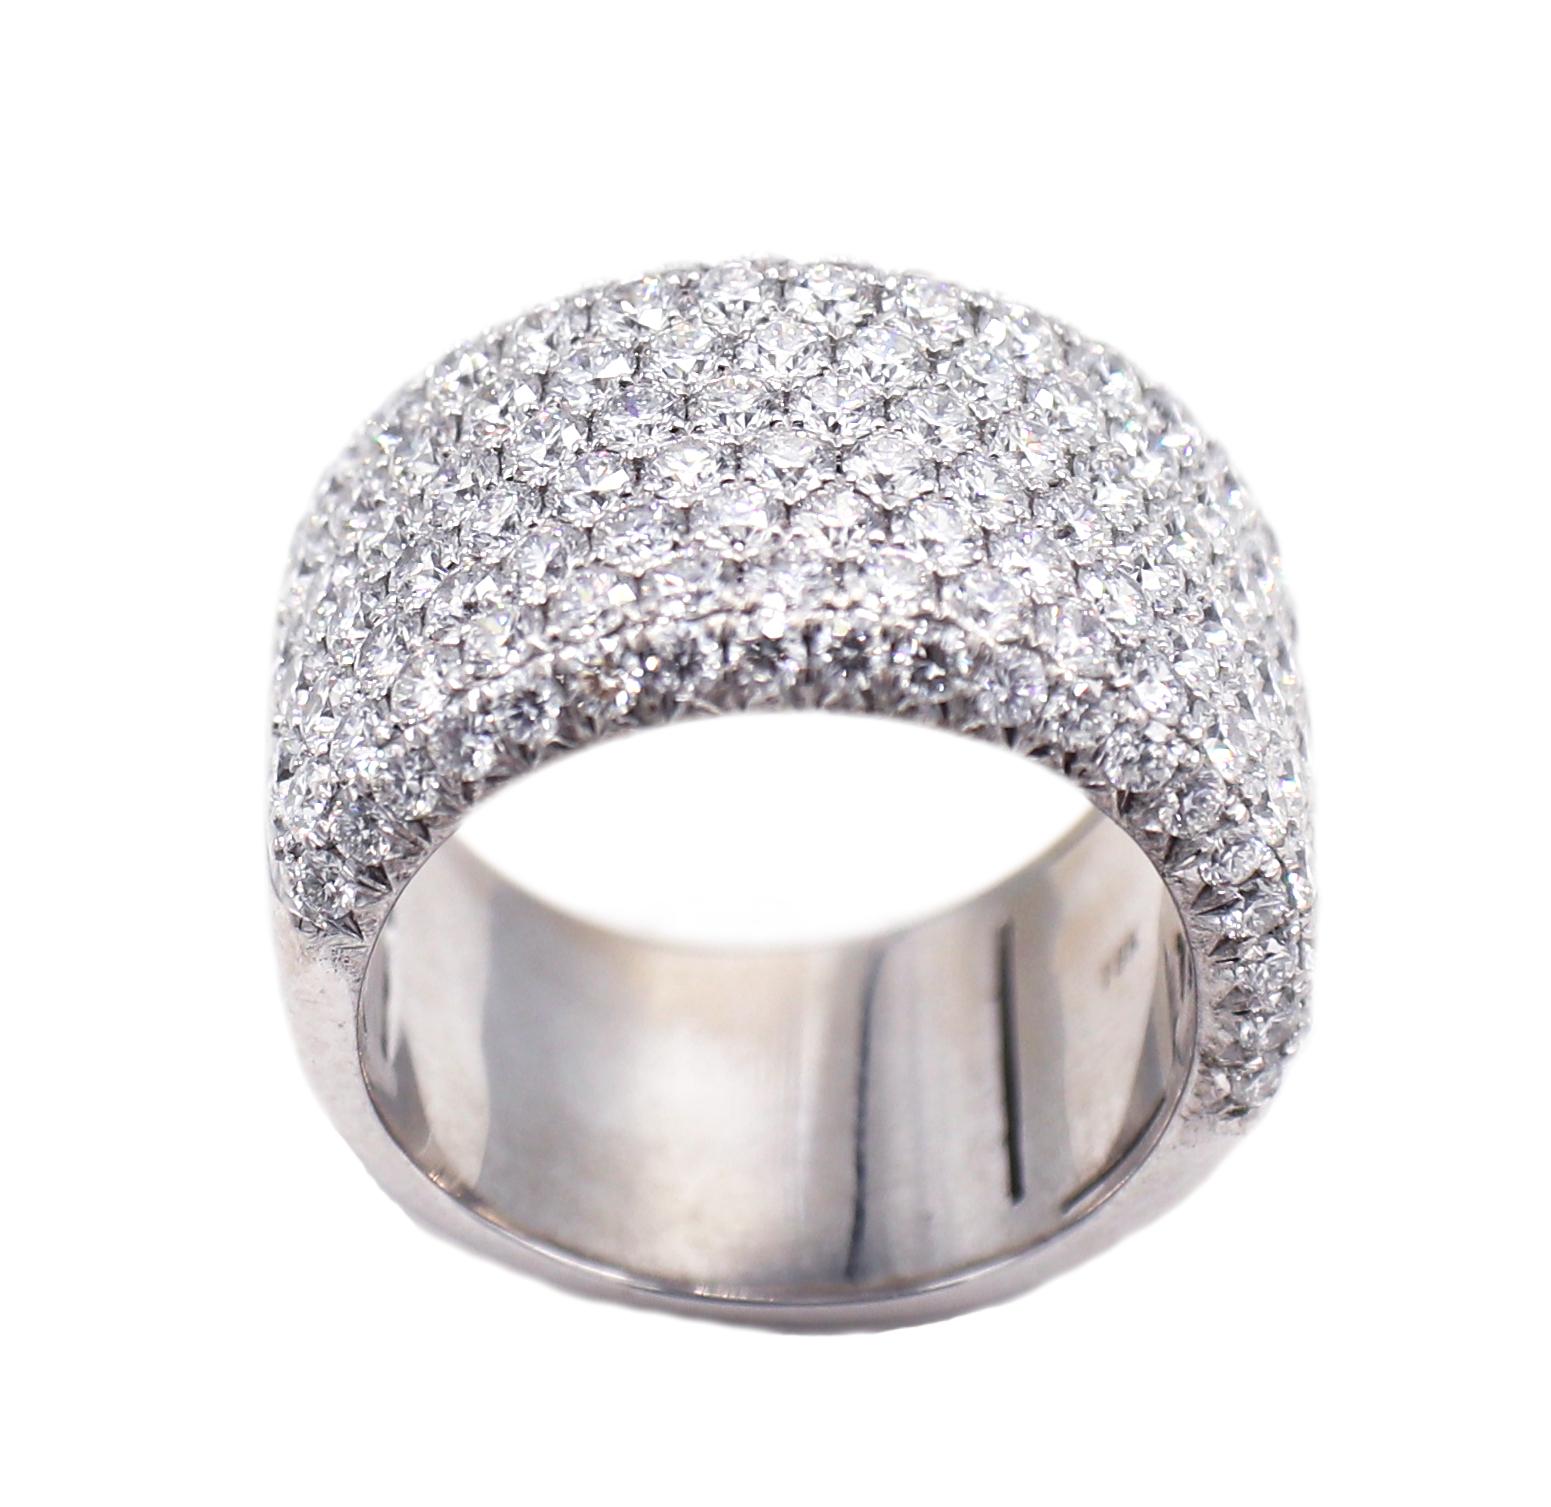 Henri Daussi Eight Row 3.35 Carat Diamond Wide Band Ring 
Metal: 18 Karat White Gold
Weight: 14.57 grams
Diamonds: Approx. 3.35 CTW G VS
Size: 6.5 (US)
Width: 10.5 - 13mm
Signed: DAUSSI 18k 